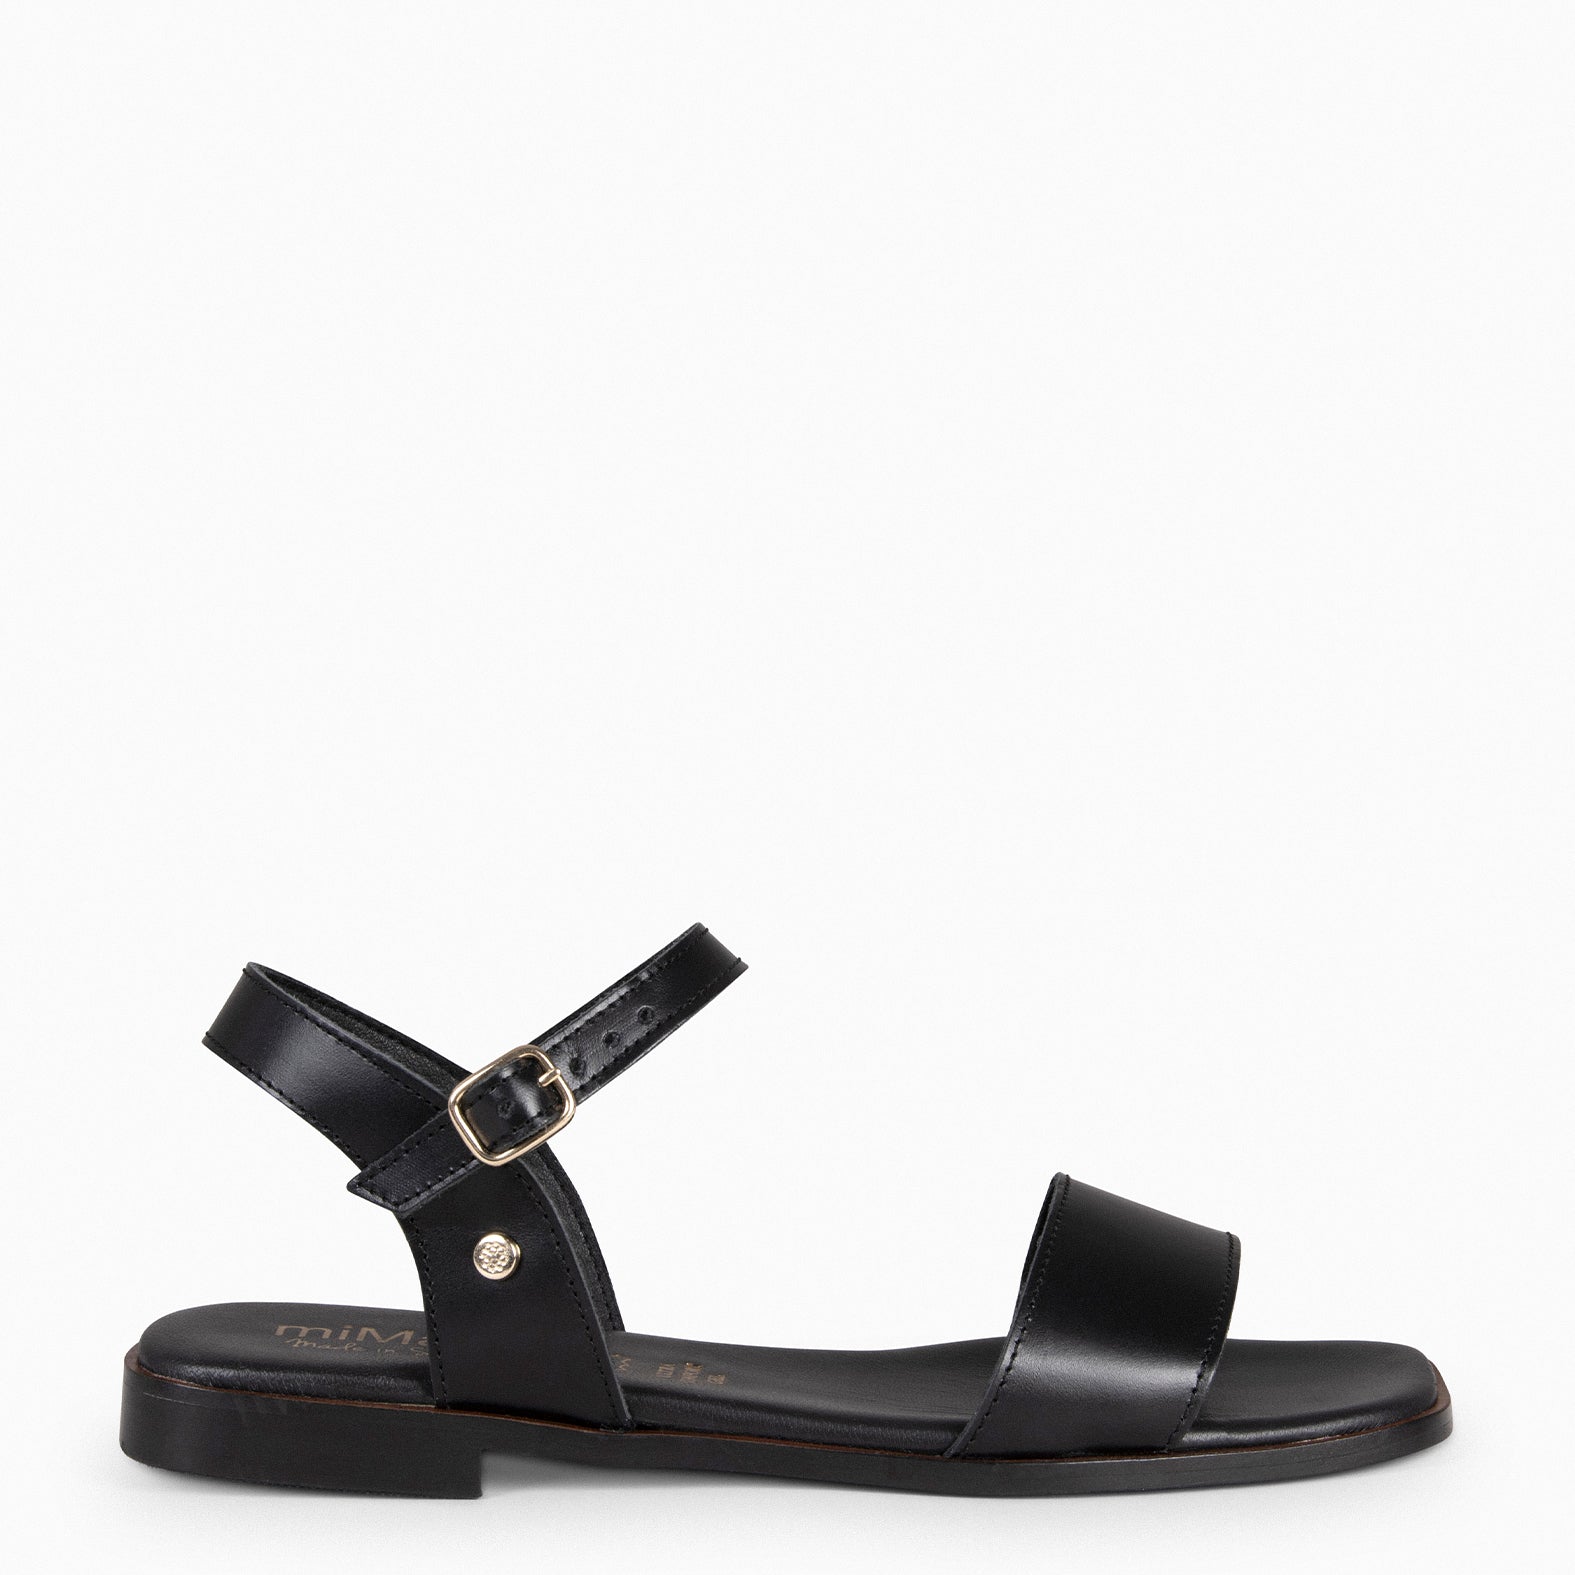 SANTORINI - BLACK Flat Sandals